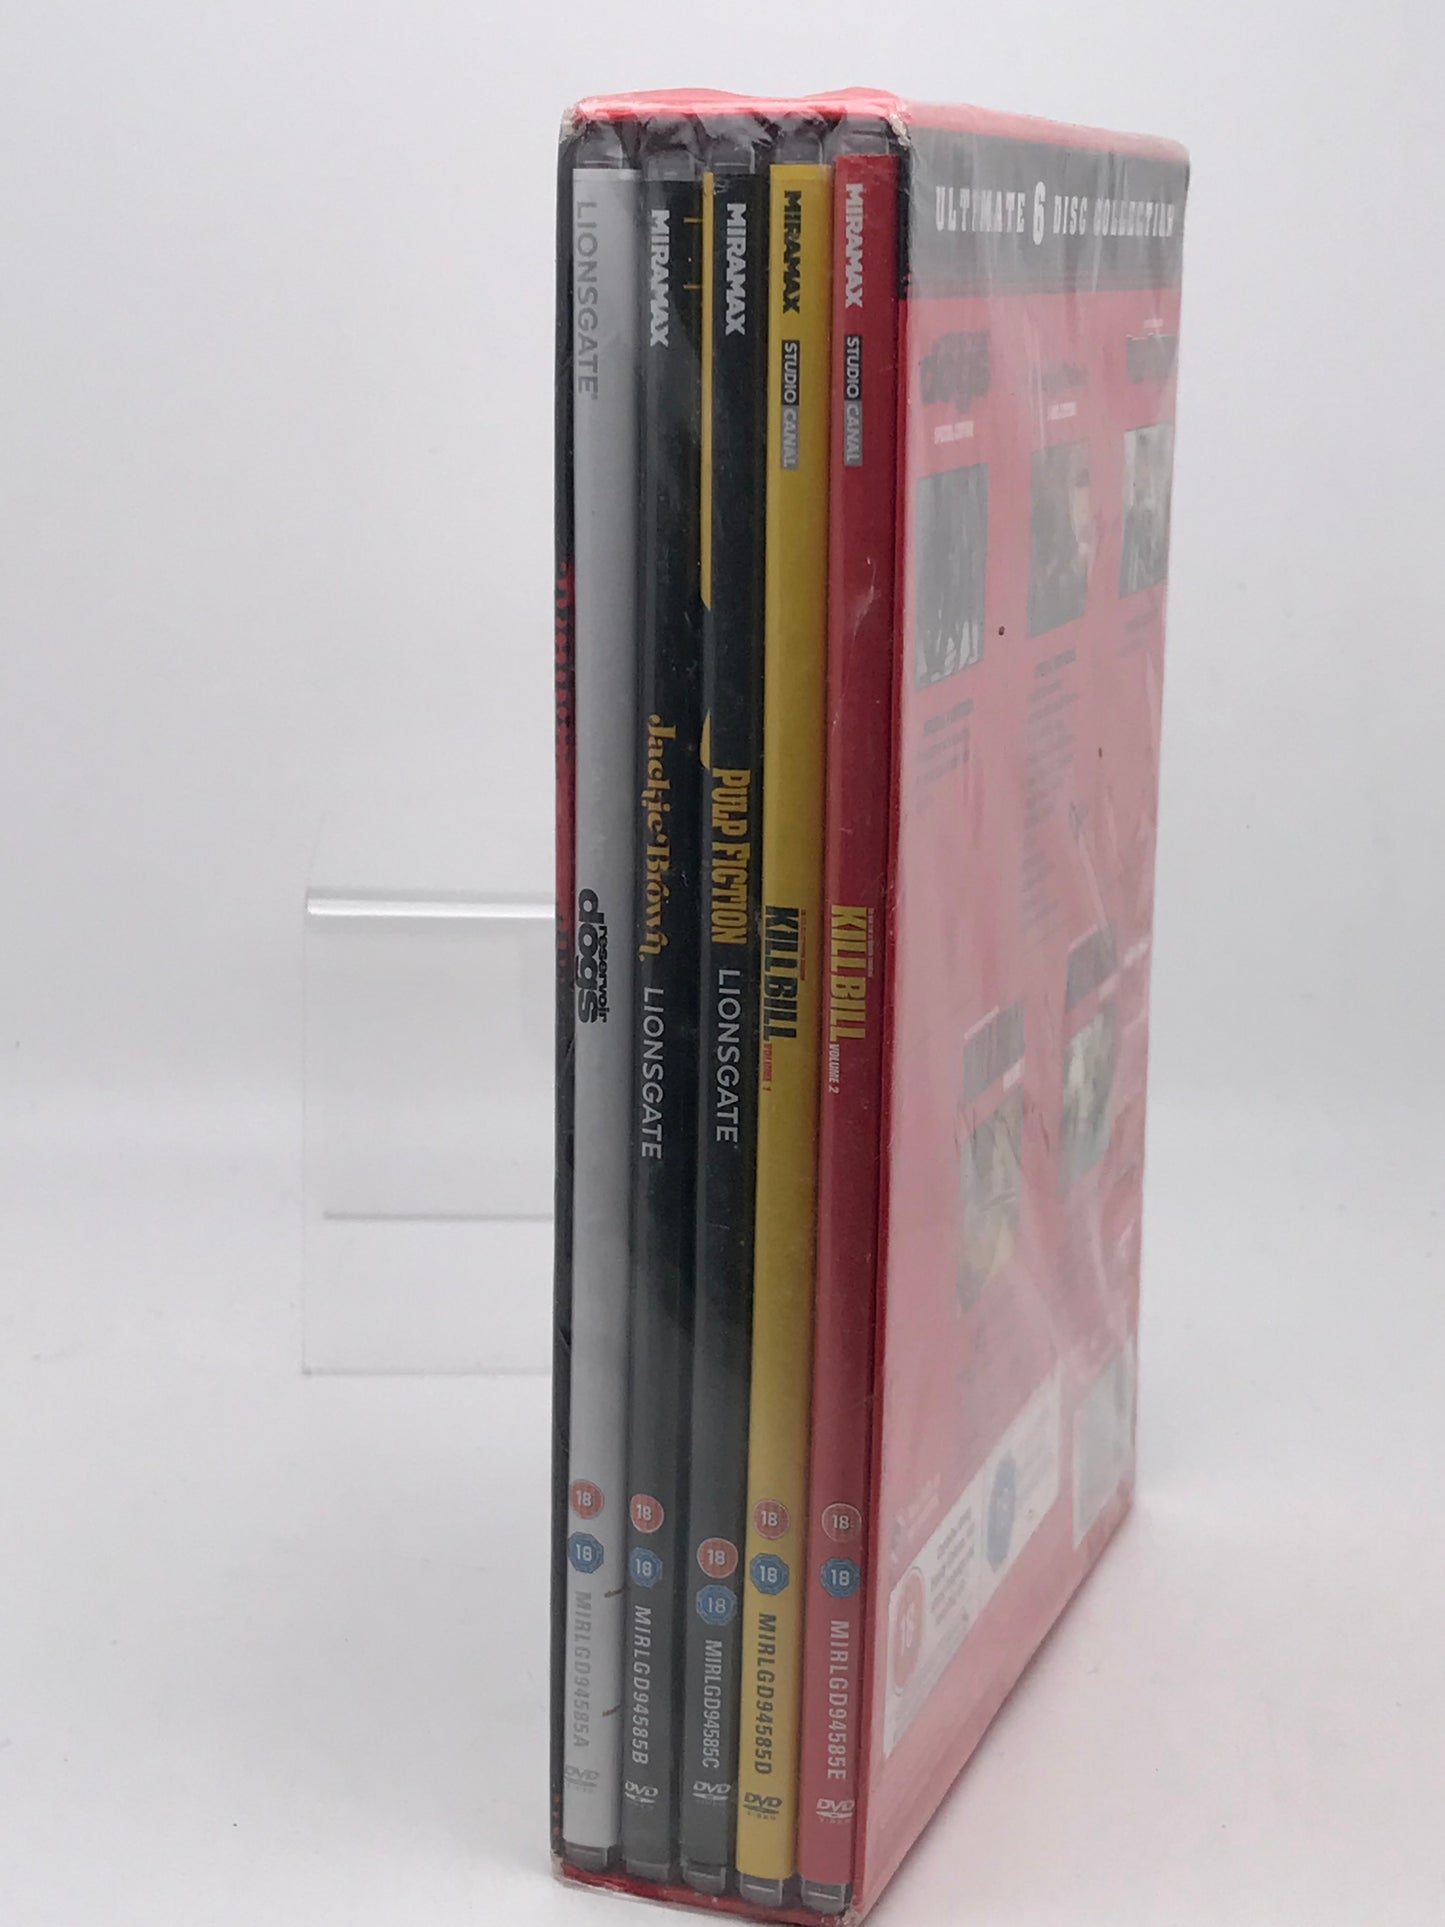 Tarantino 6 Disc DVD Collection REGION 2 NEW/SEALED BR01